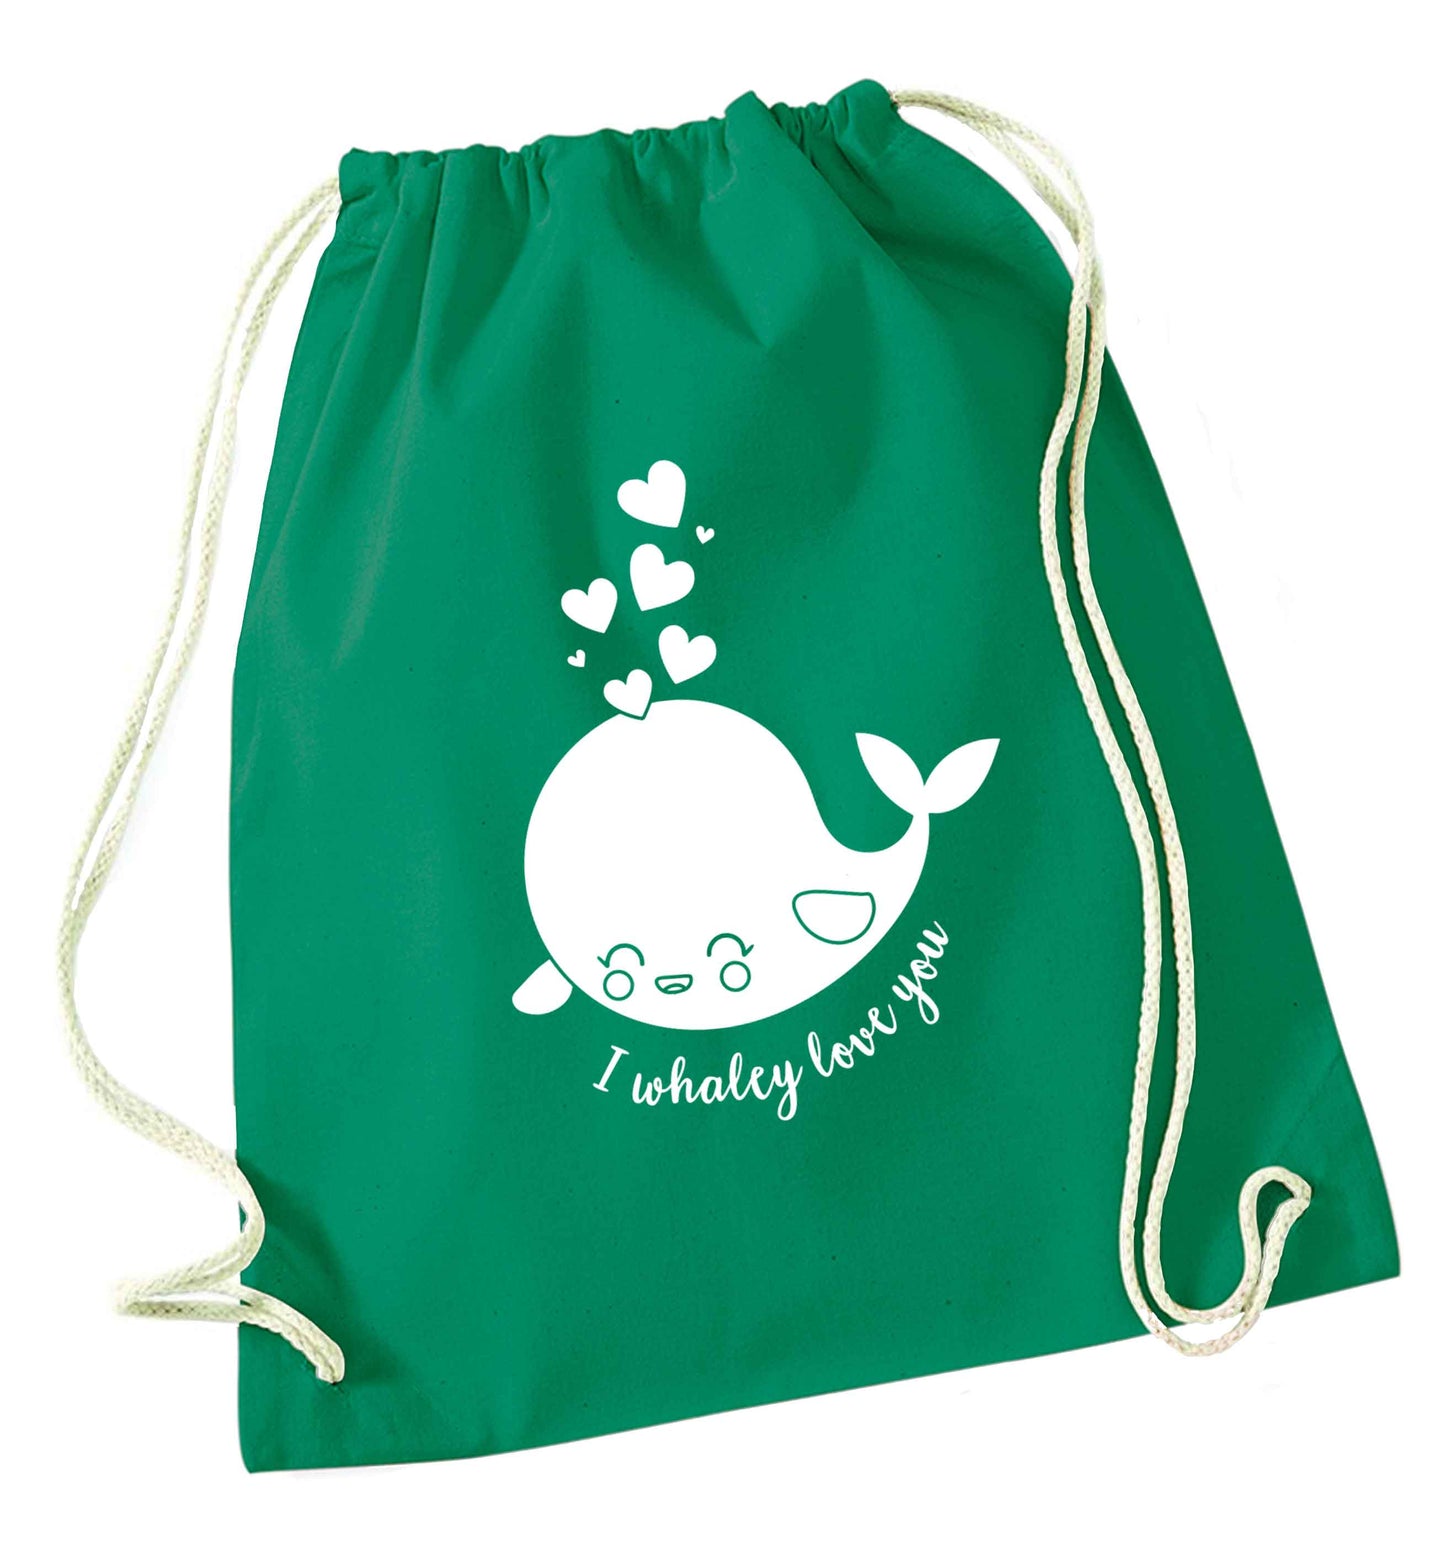 I whaley love you green drawstring bag